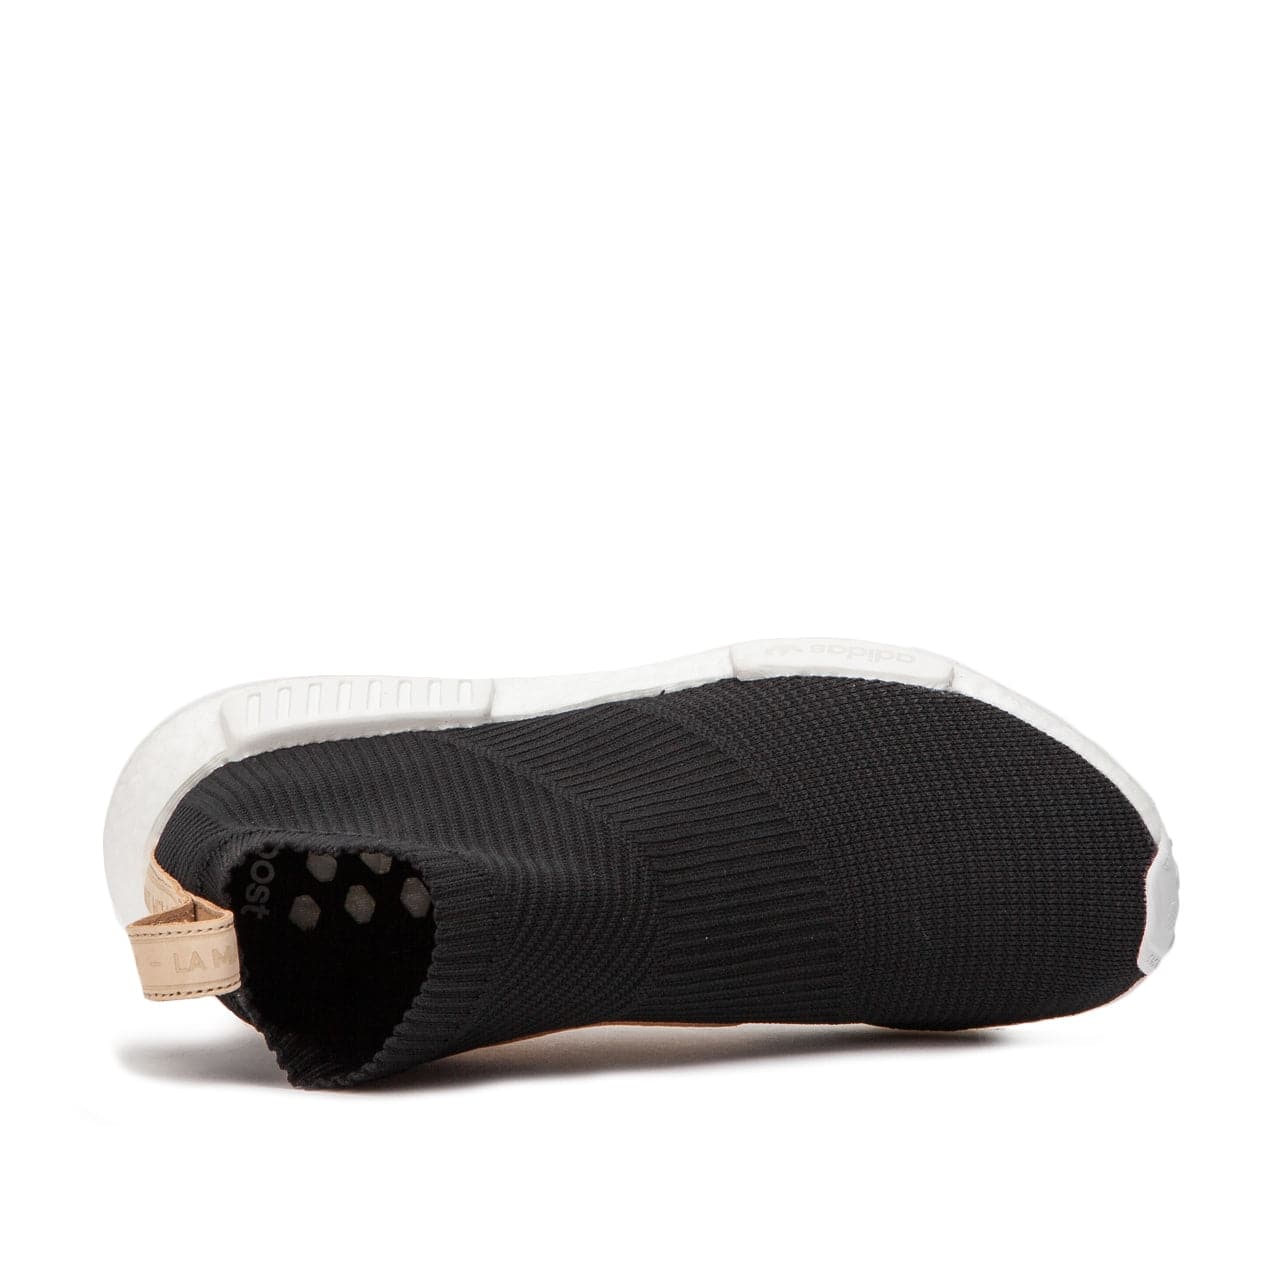 adidas NMD CS1 City Sock Primeknit (Schwarz / Leder)  - Allike Store